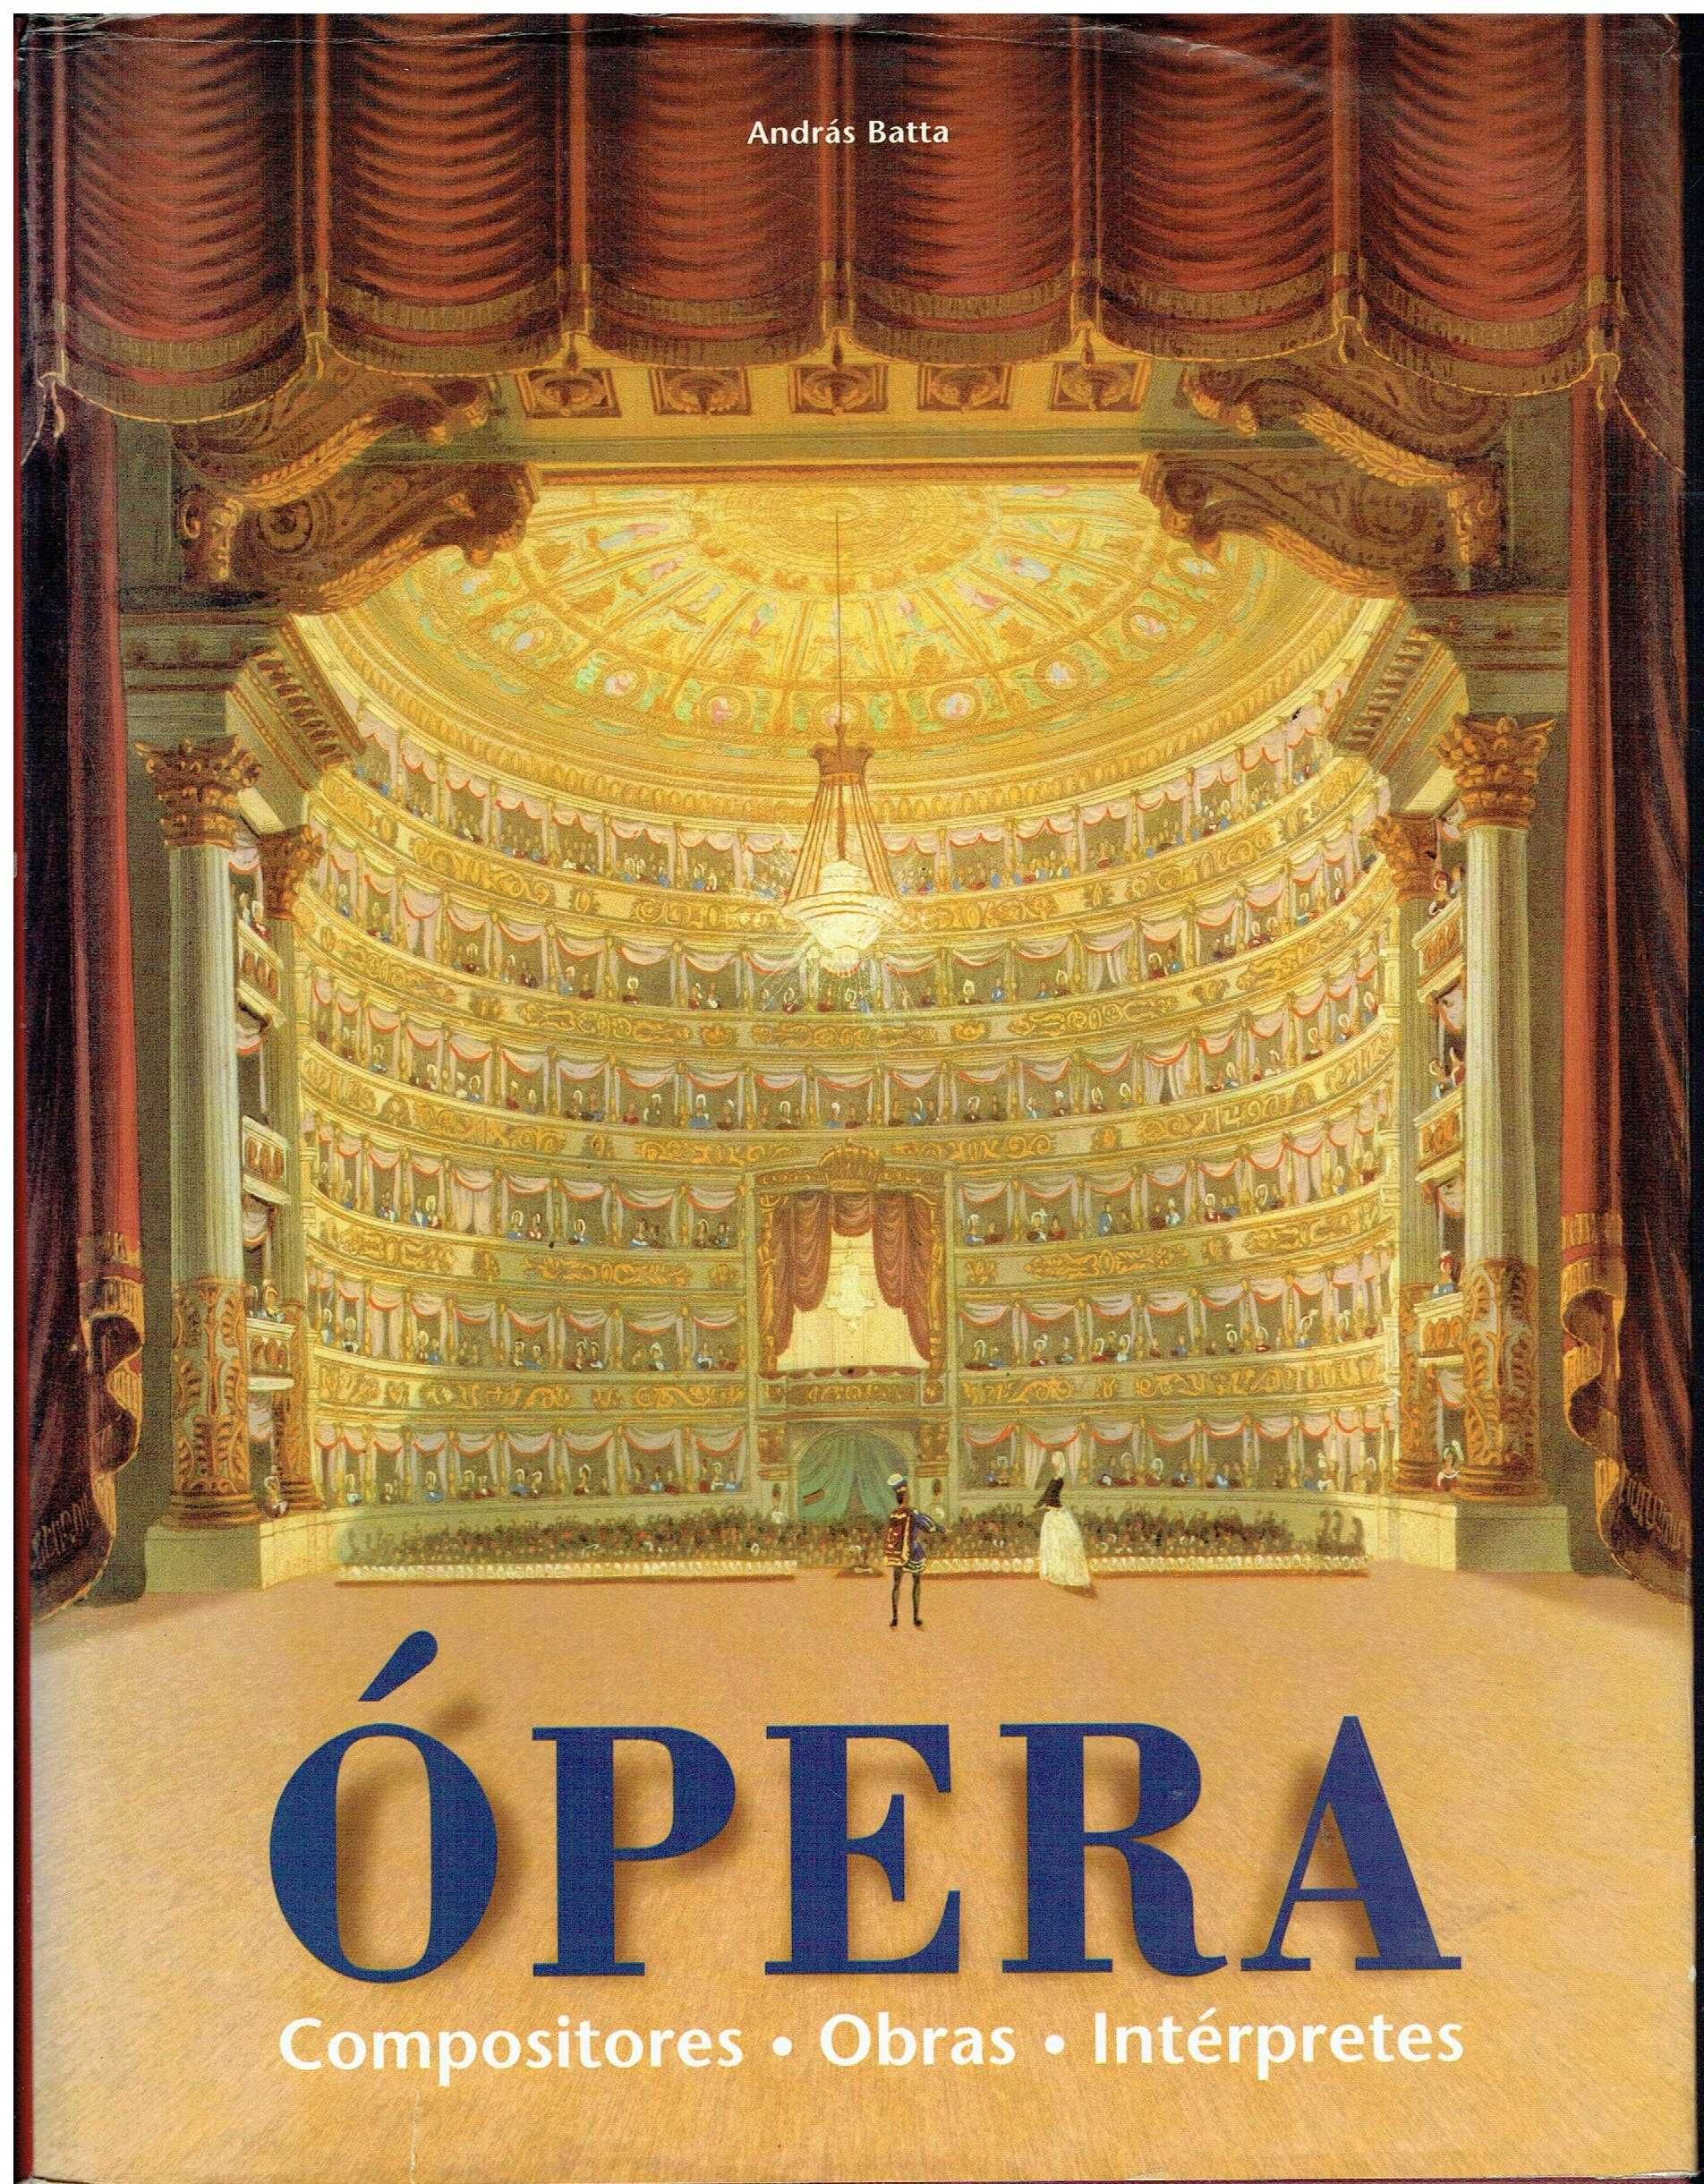 13092

Ópera
Compositores, Obras, Intérpretes 
de András Batta